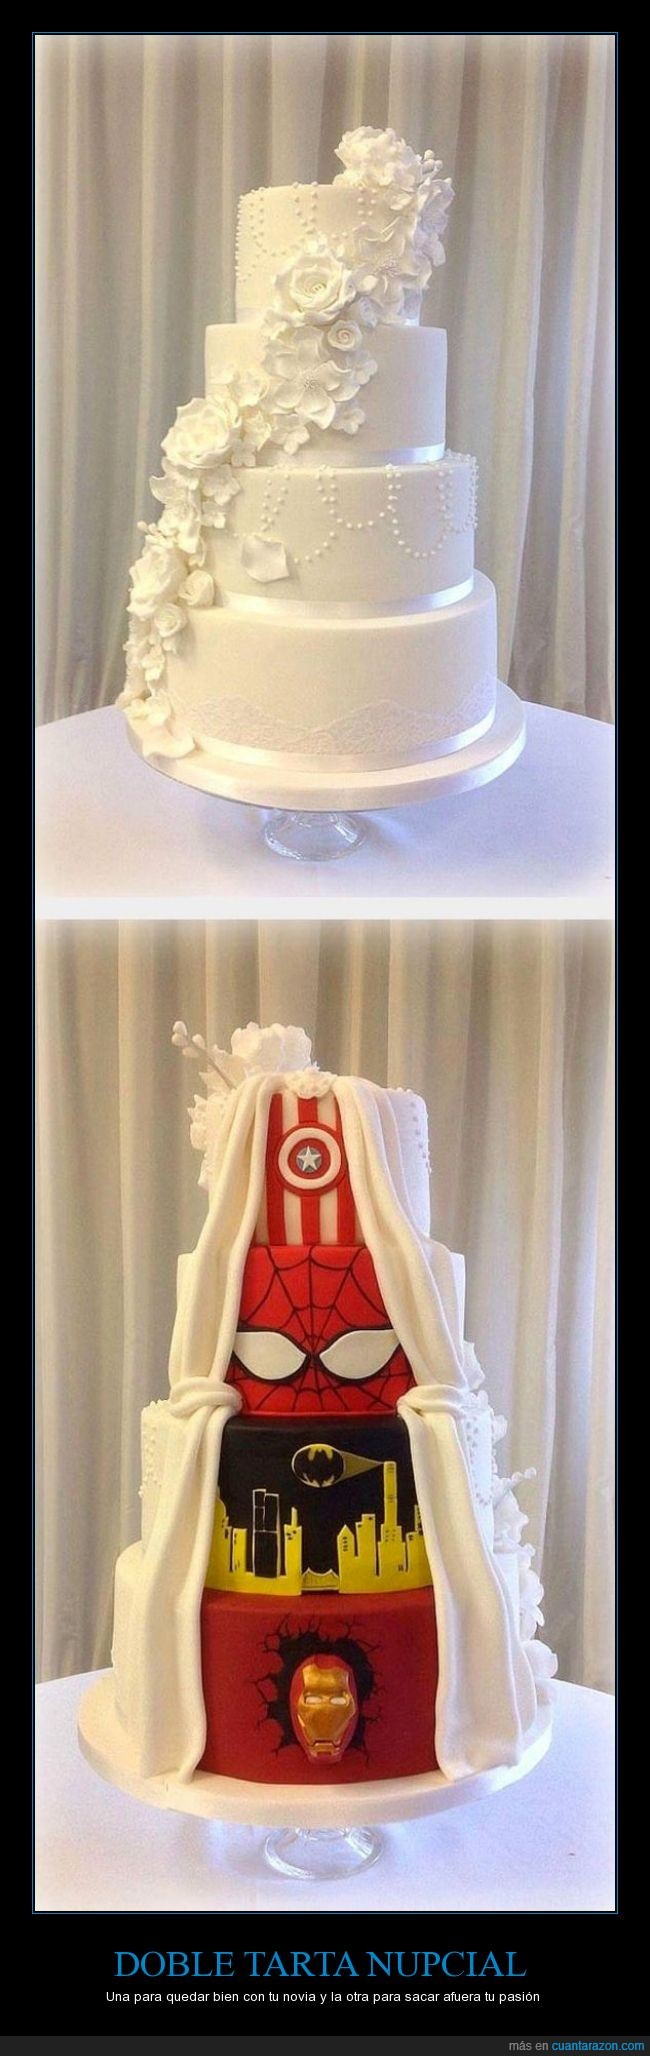 tarta,pastel,Avengers,boda,dos caras